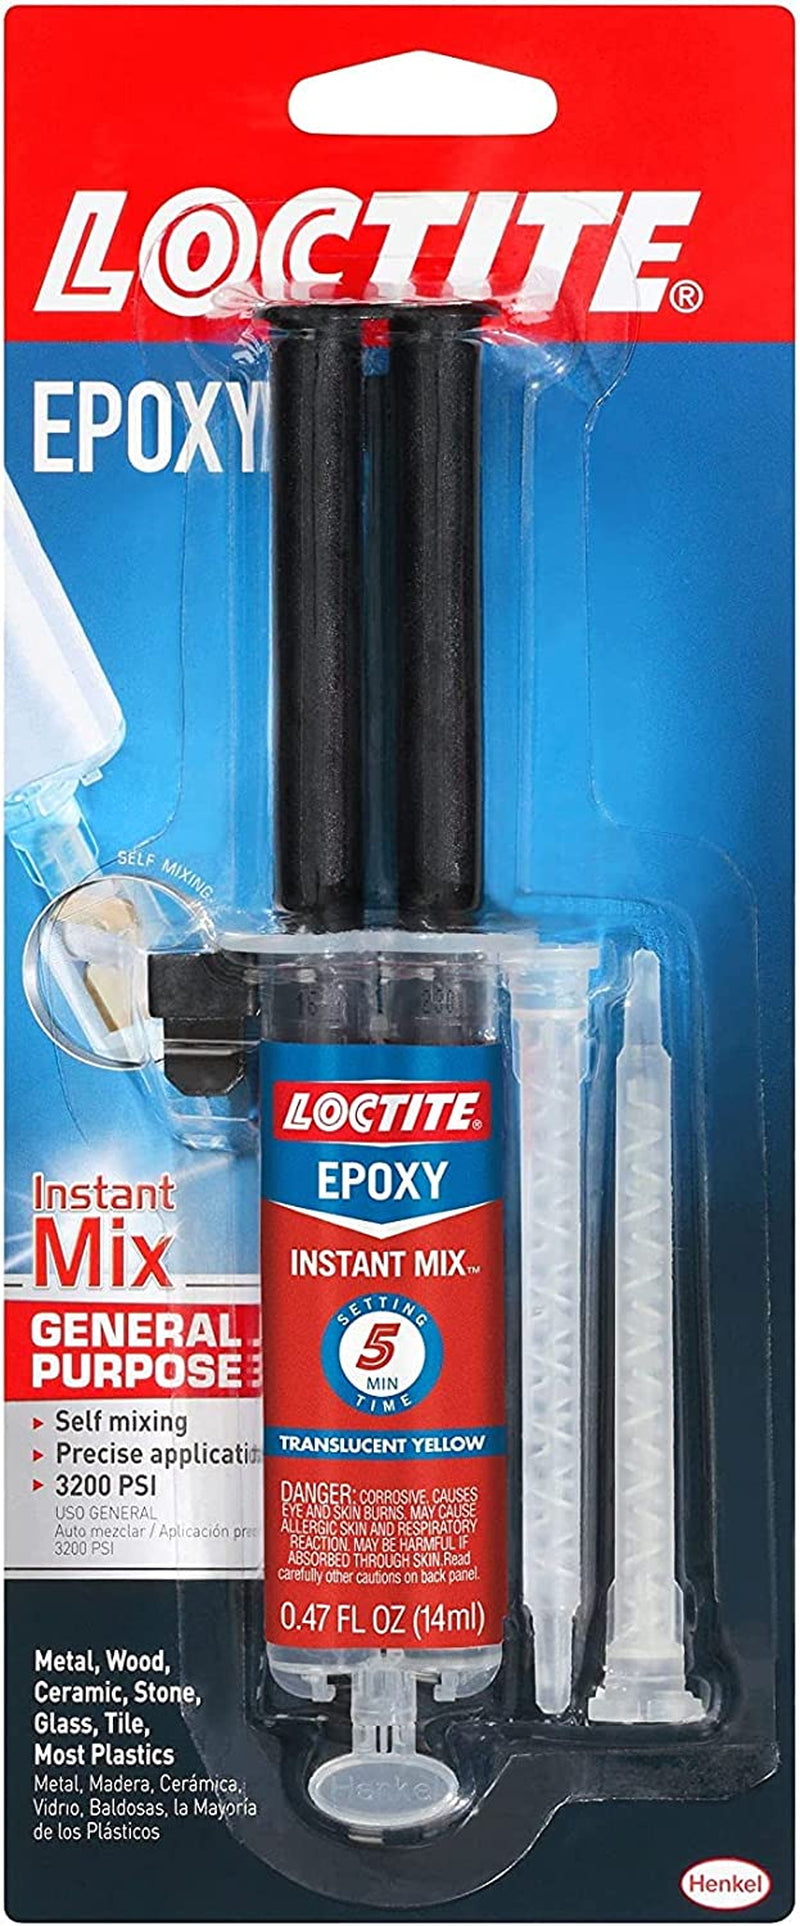 Loctite, Loctite Epoxy Instant Mix 5 Minute, 0.47 Fl. Oz. Syringe (Pack of 6)